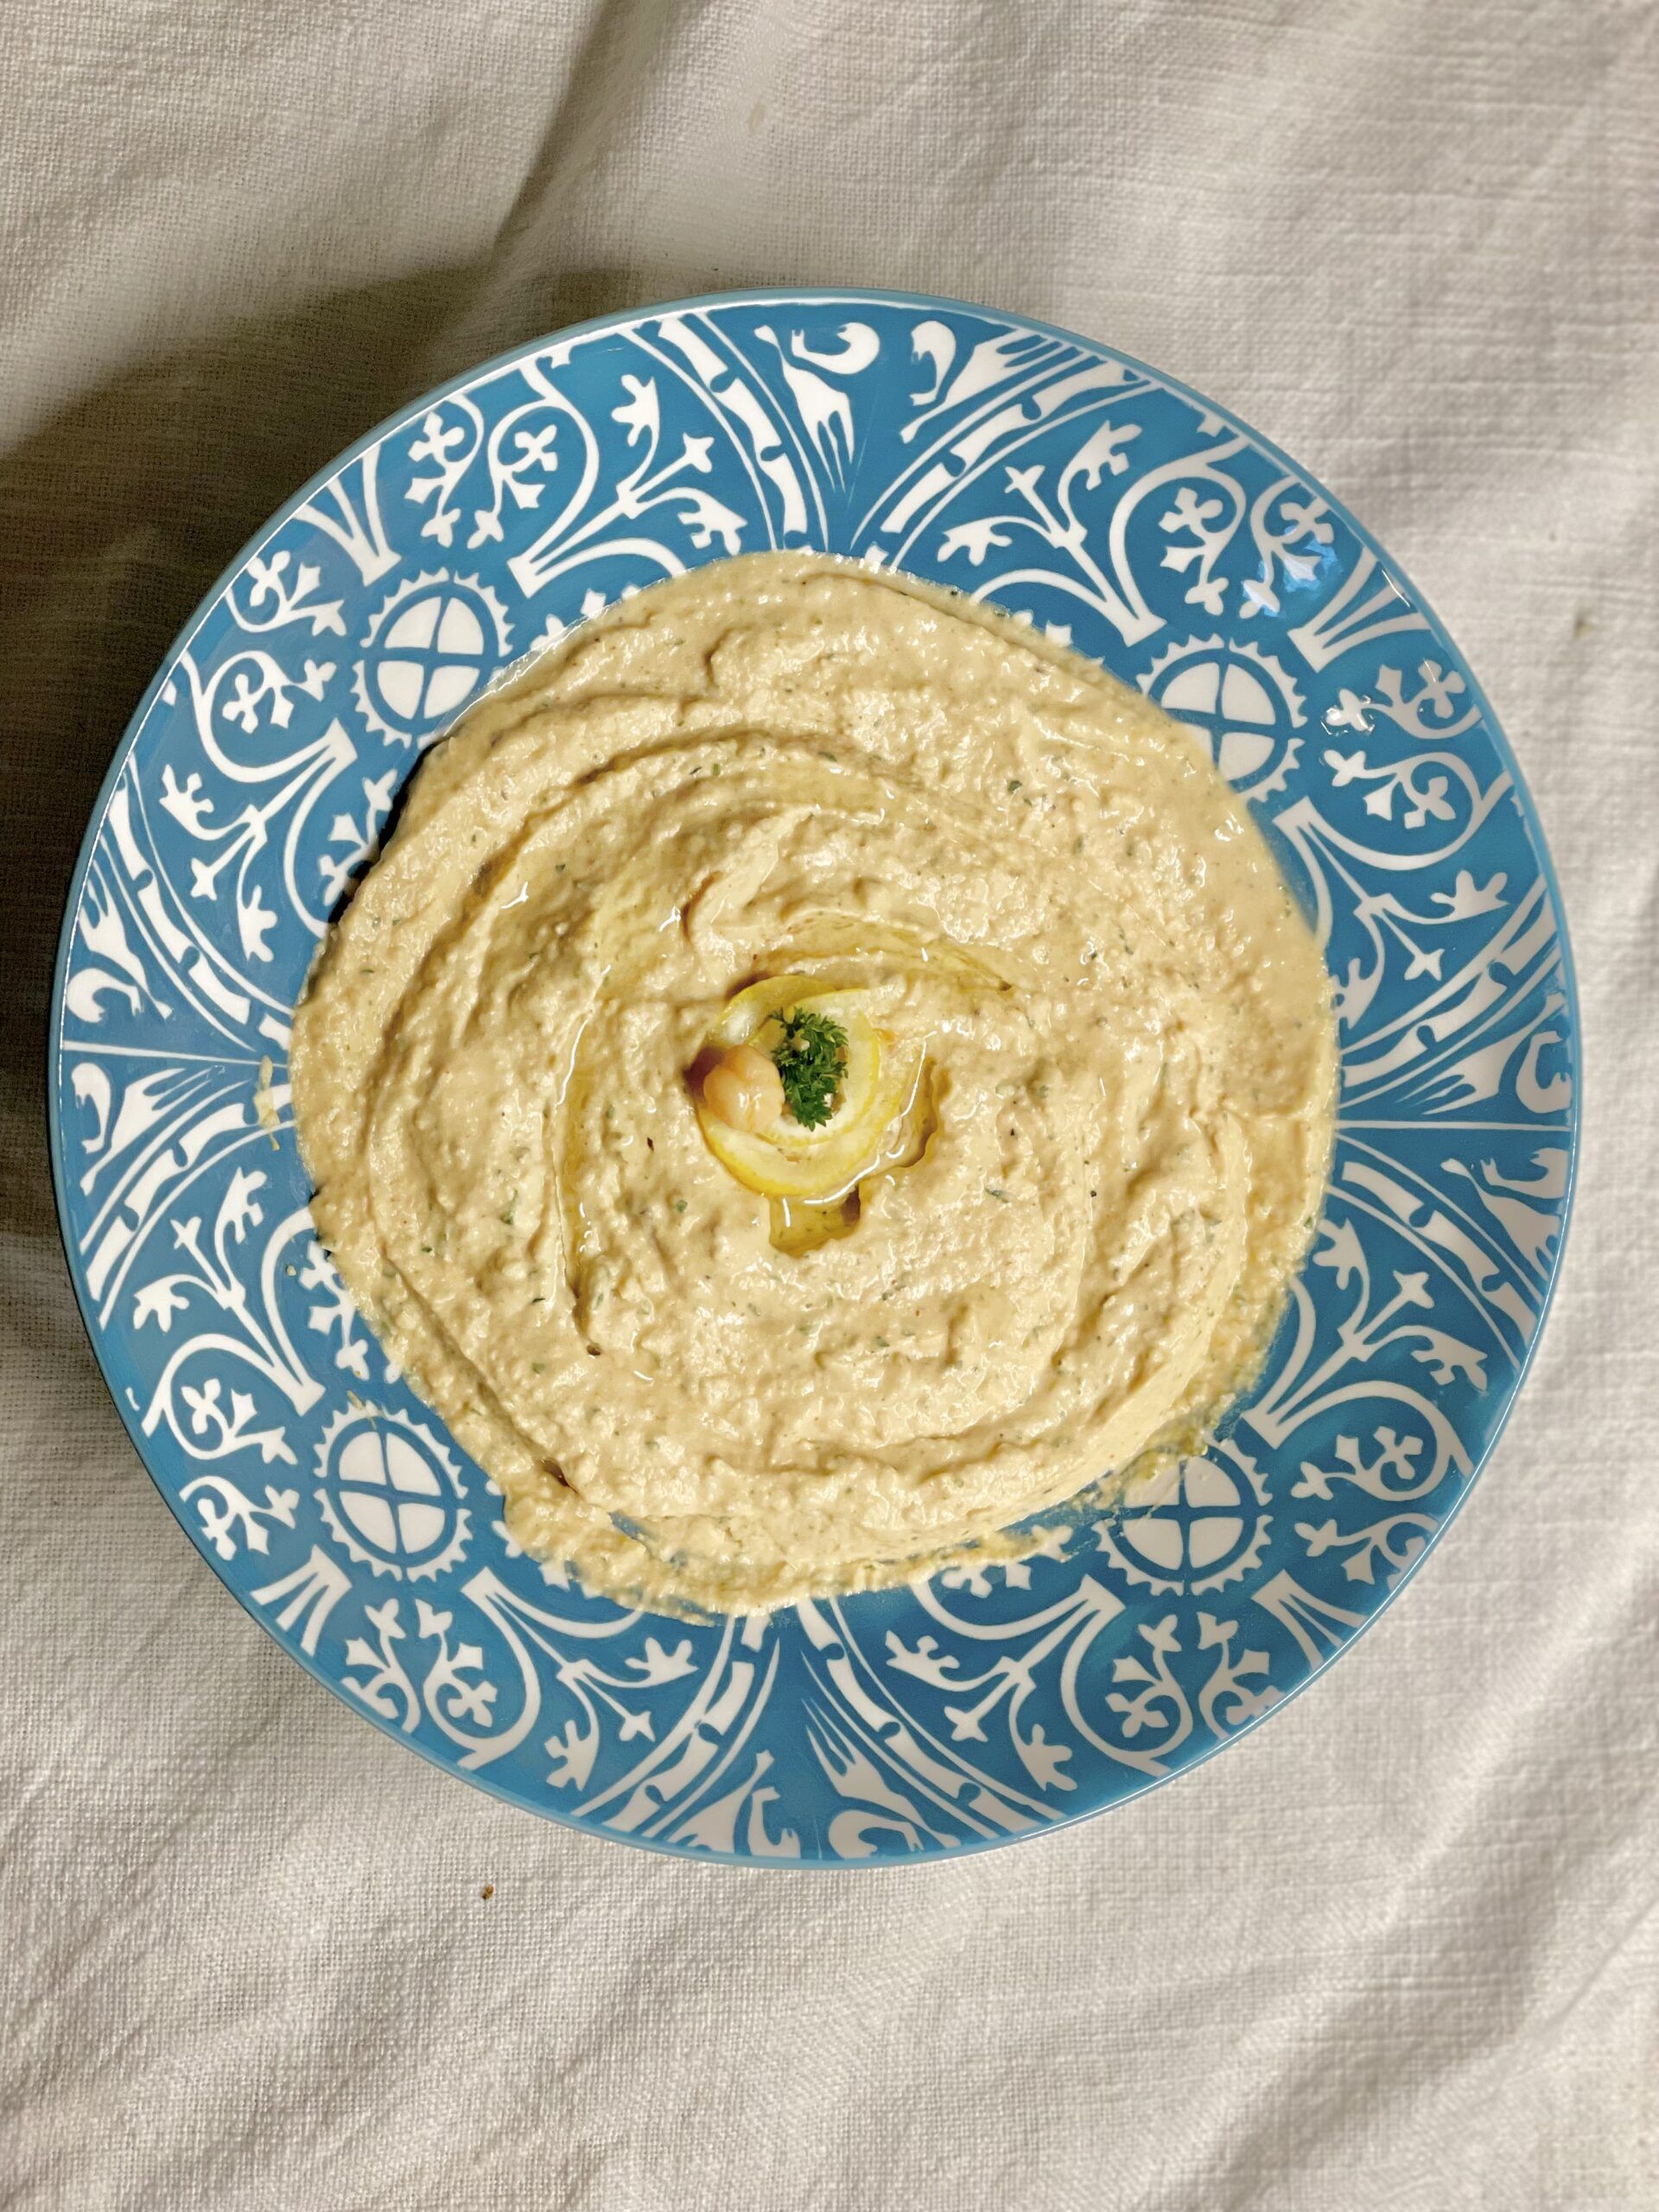 Sample hummus from Jerusalem